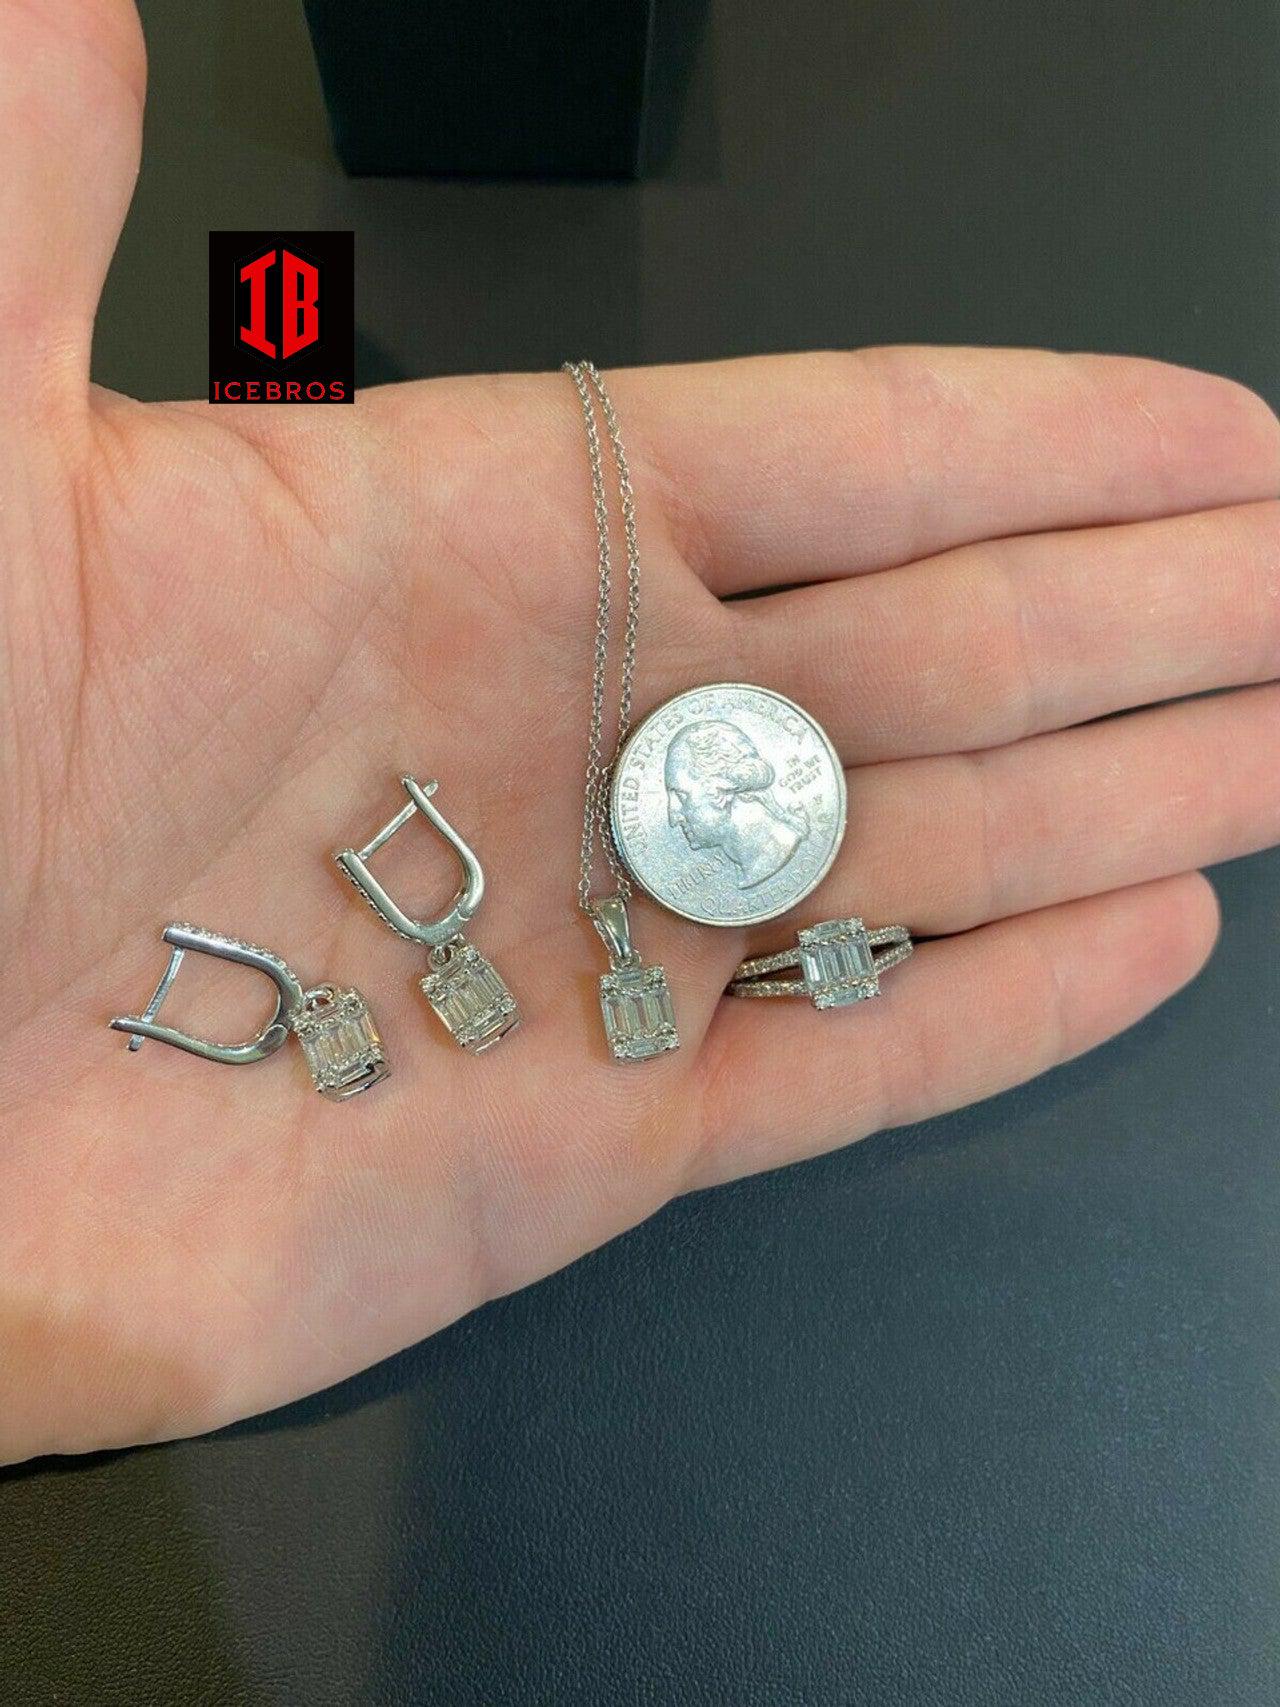 14k Gold Vermeil 925 Silver Baguette Diamond Ring Necklace Earrings Jewelry Set